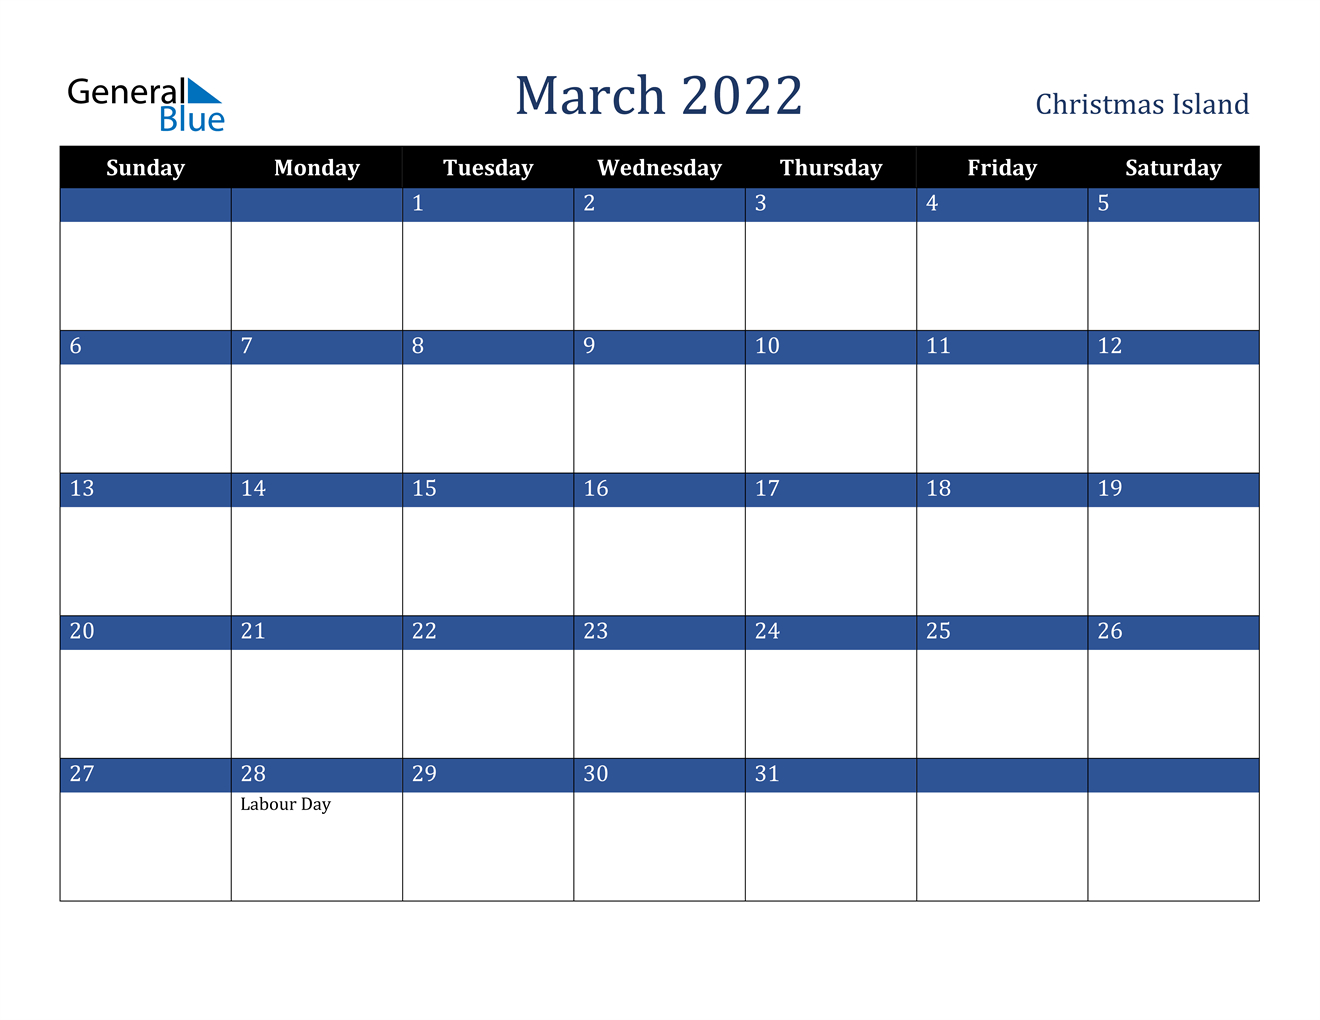 March 2022 Calendar - Christmas Island